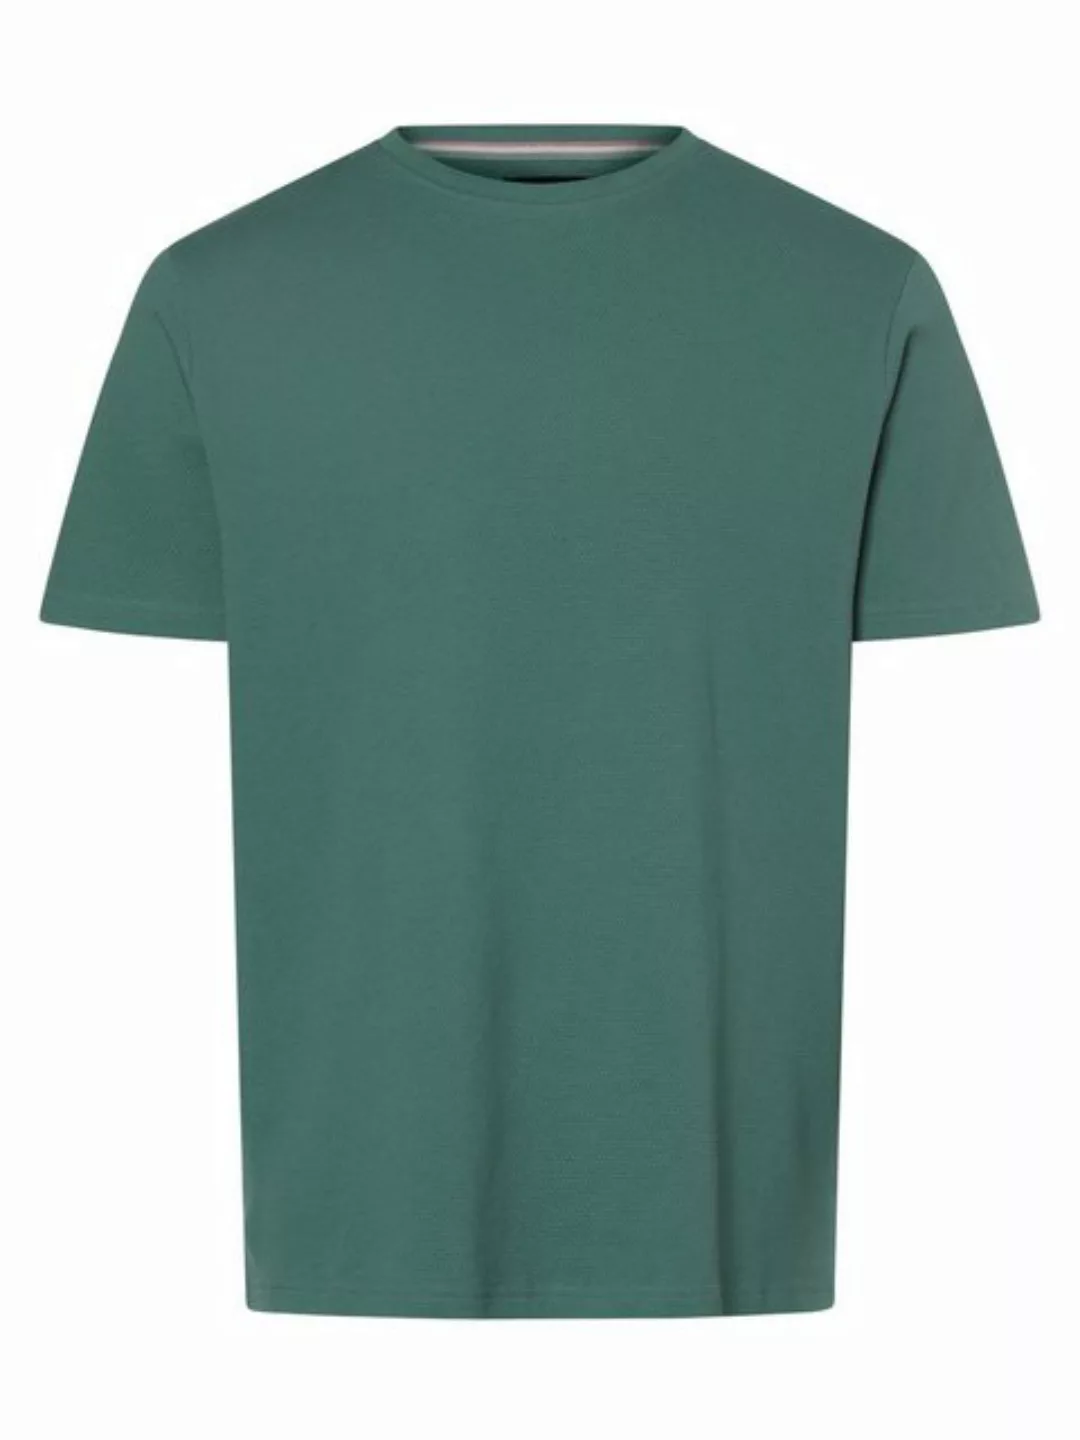 Aygill's T-Shirt Corvan günstig online kaufen